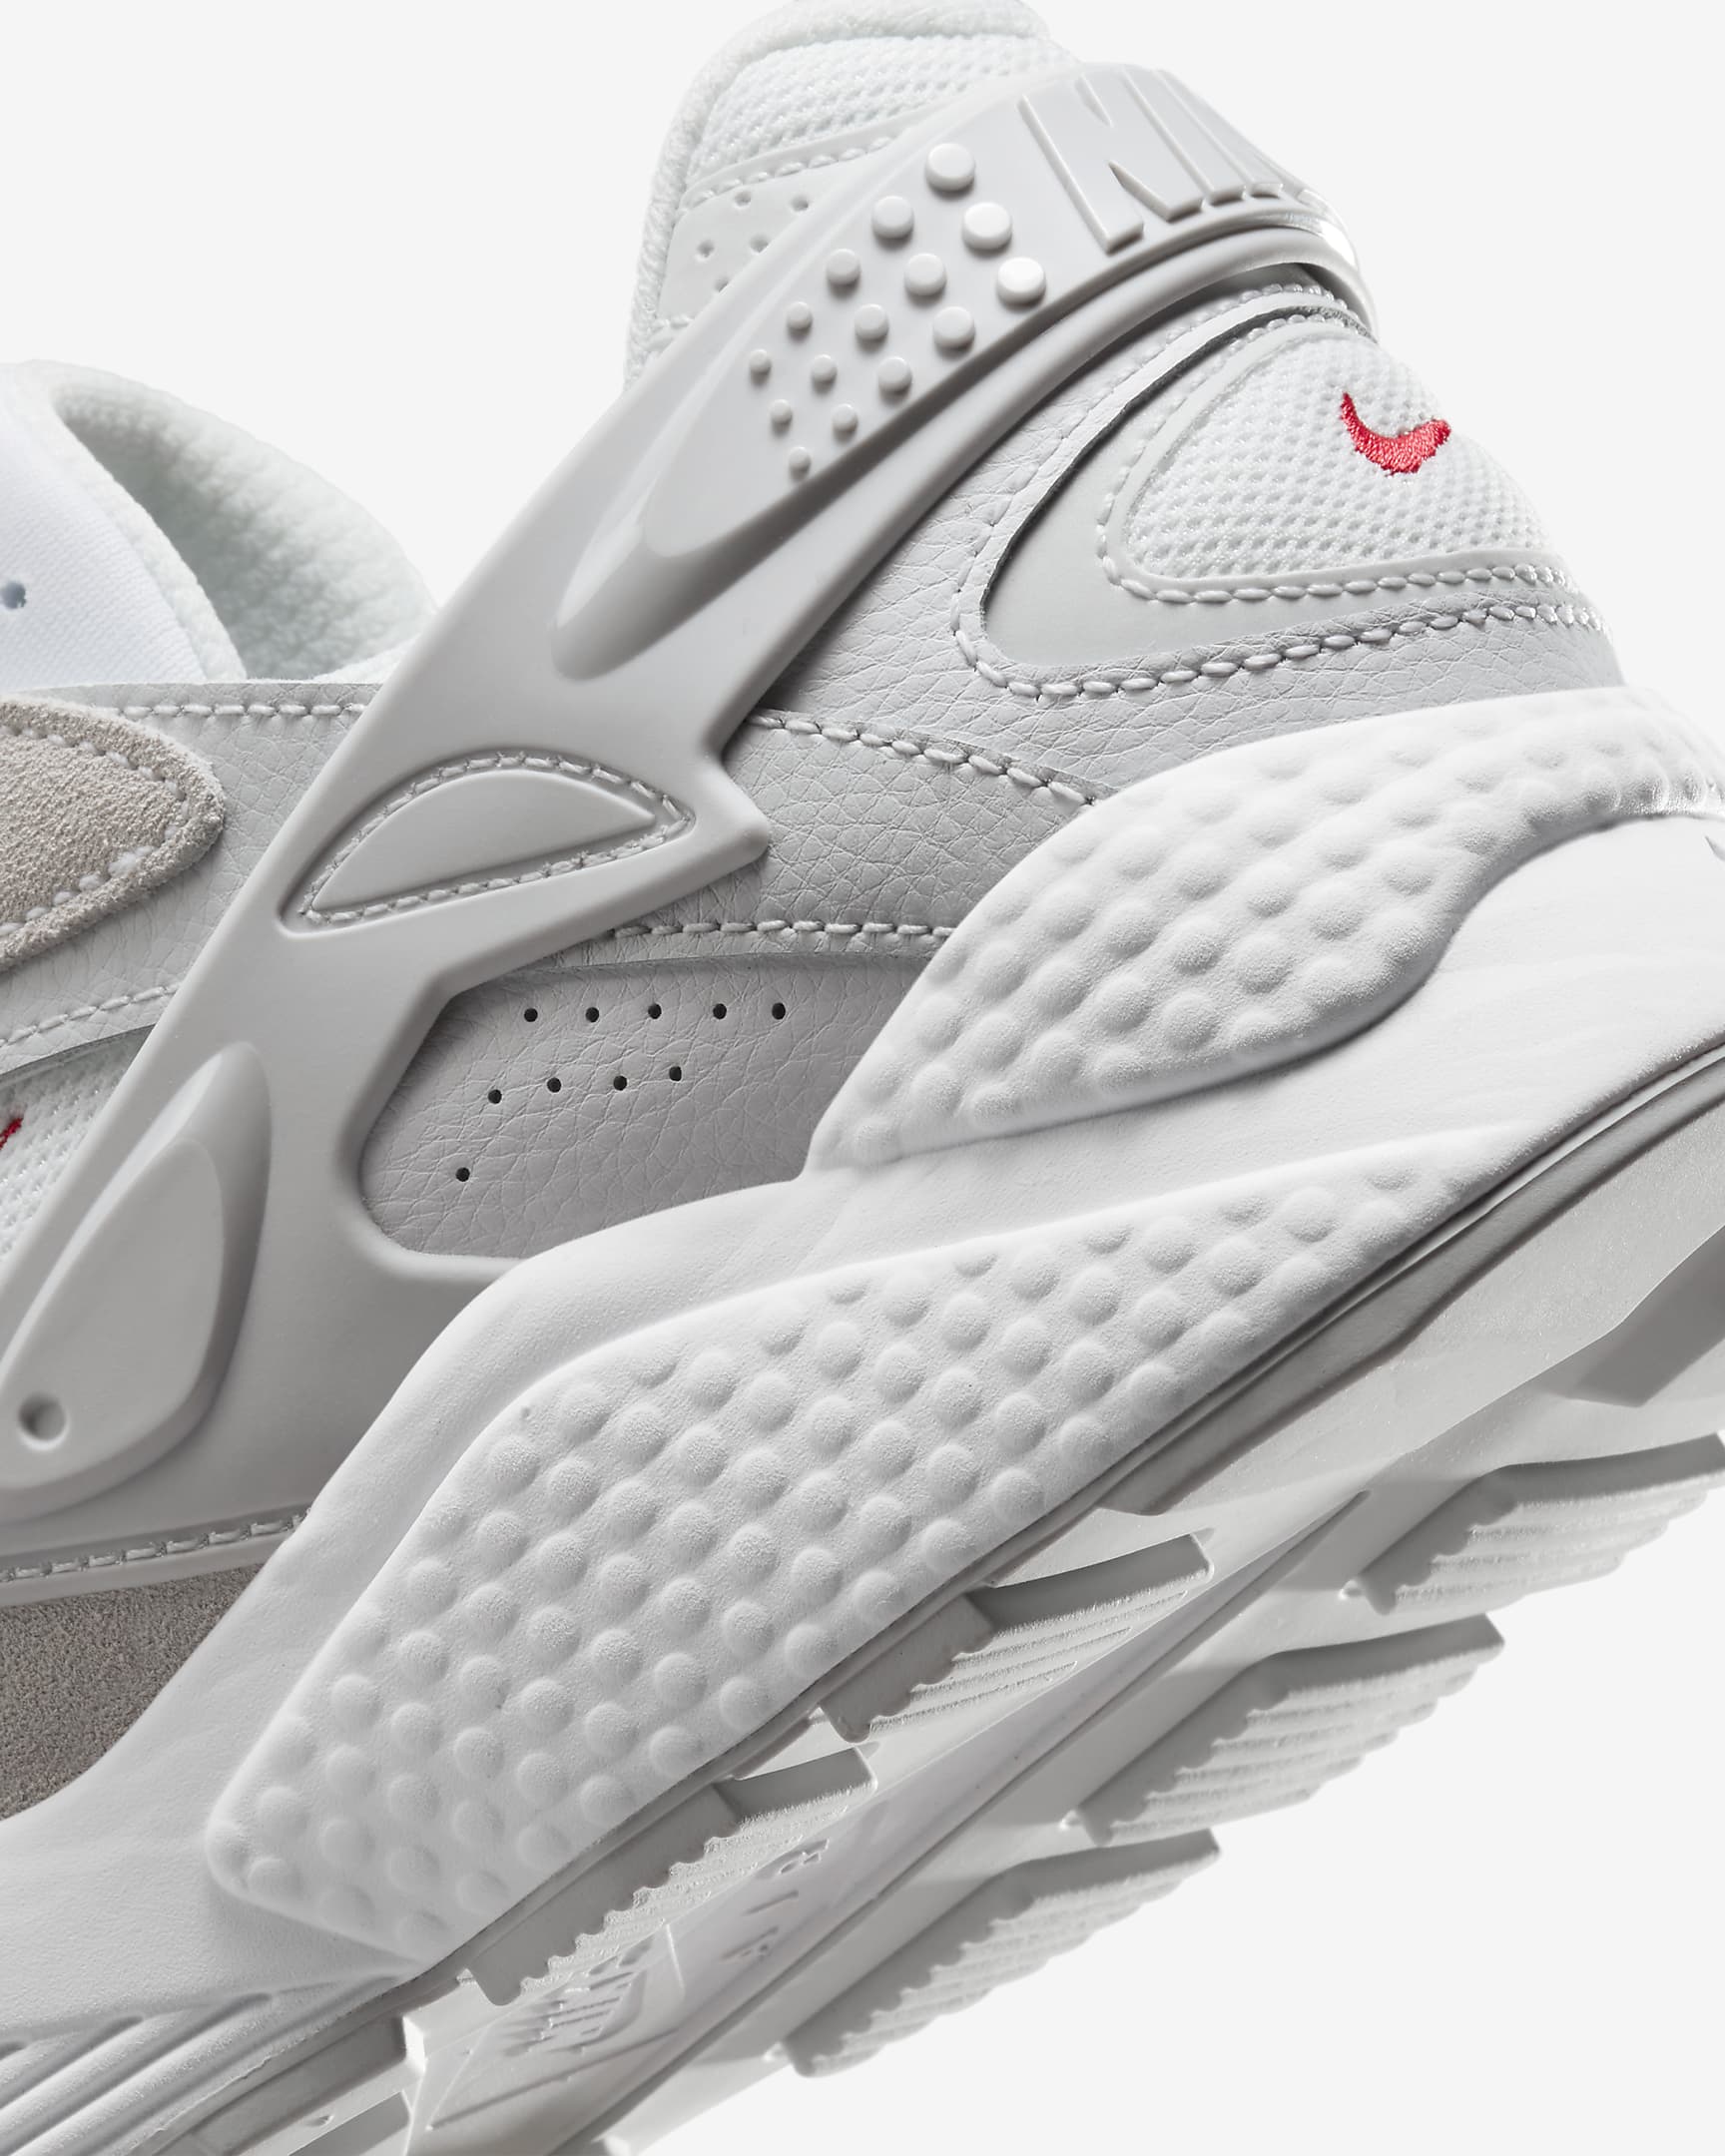 Nike Air Huarache Runner Men's Shoes - Summit White/Photon Dust/White/University Red